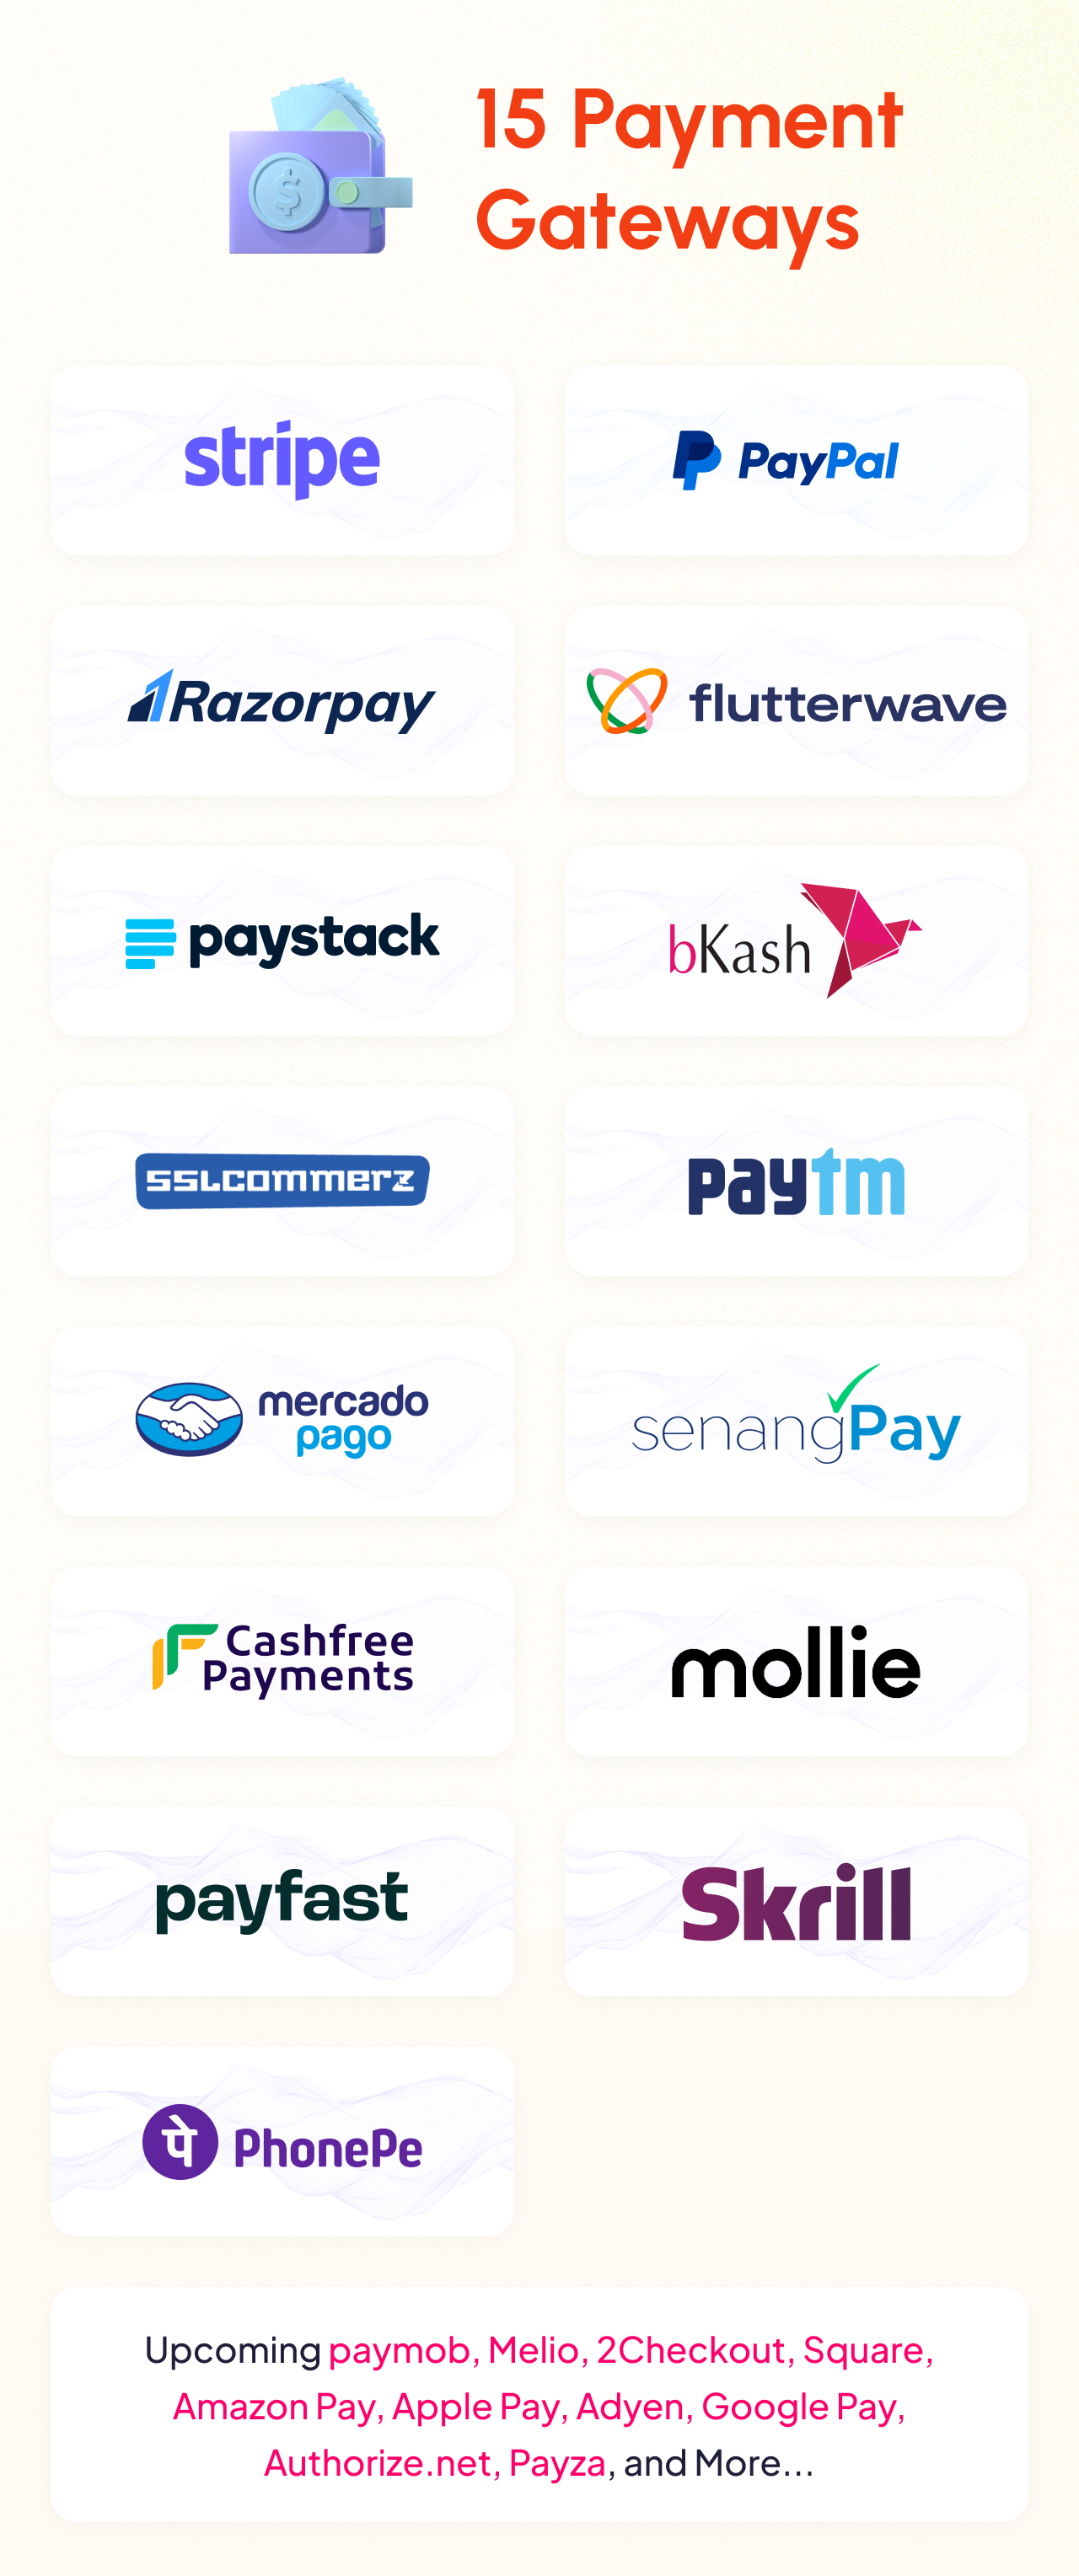 Payment Gateways included with shopking are PayPal, Stripe, RazorPay, FlutterWave, PayStack, Bkash, Sslcommerz, PayTm, MercadoPago, SenangPay, Cashfree, Mollie, Skrill, PhonePe